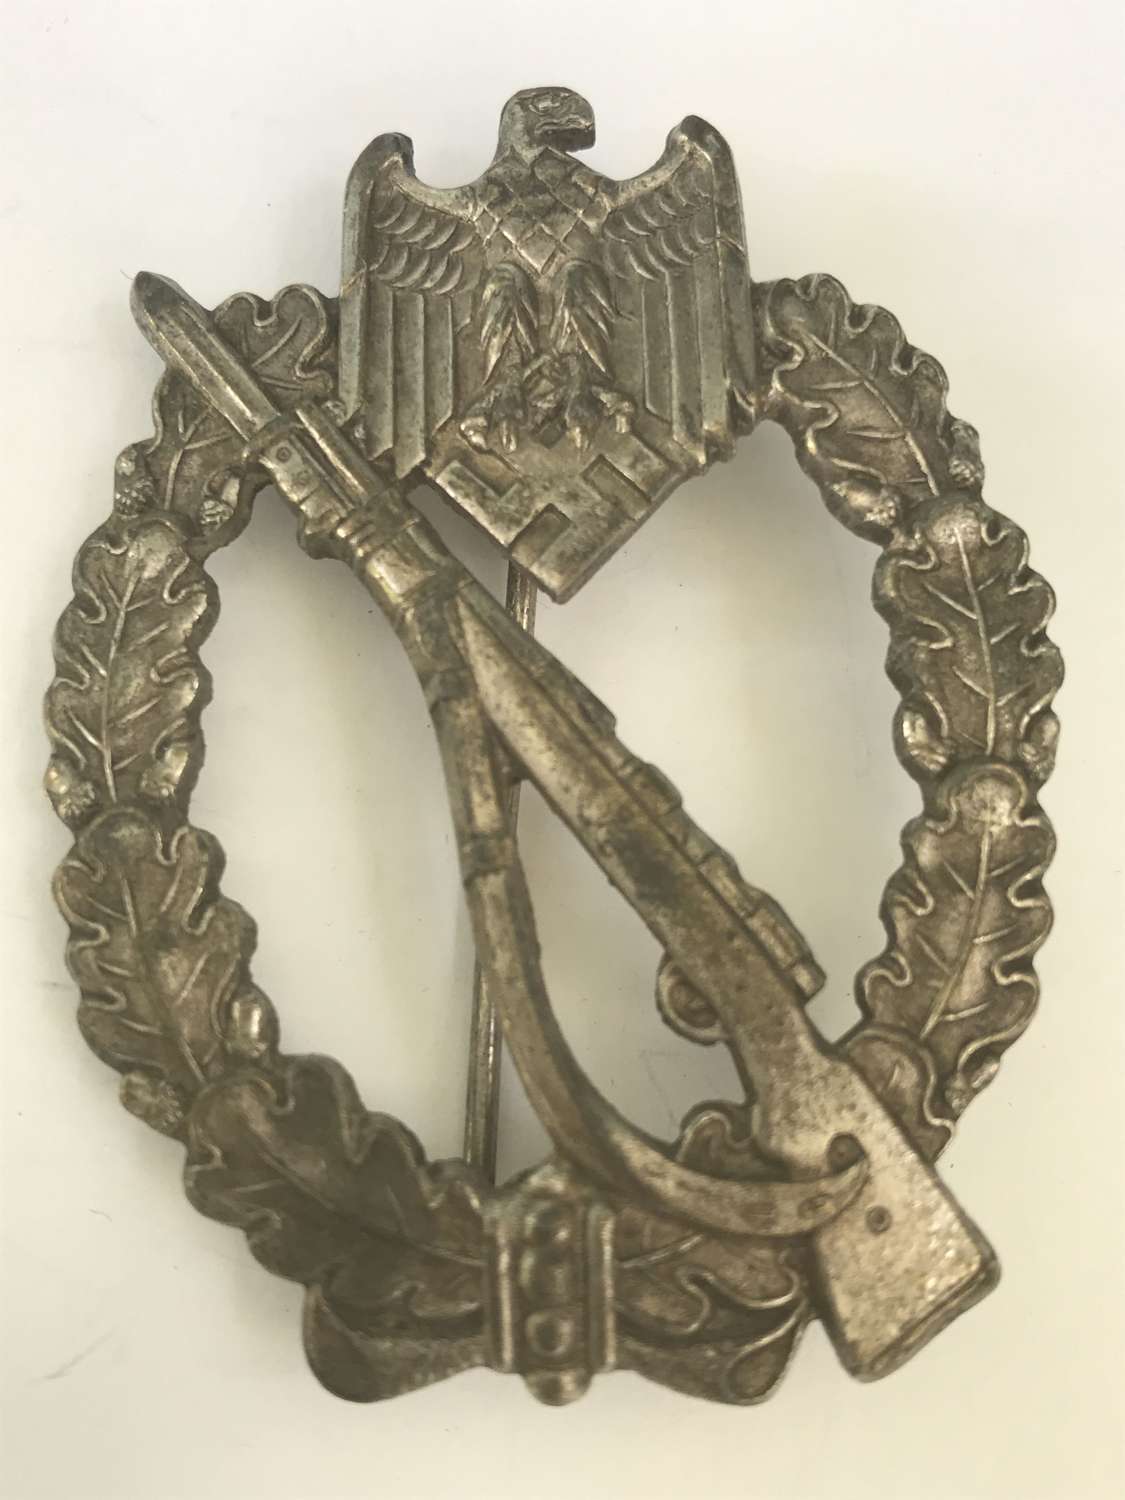 German infantry assault badge mid war production